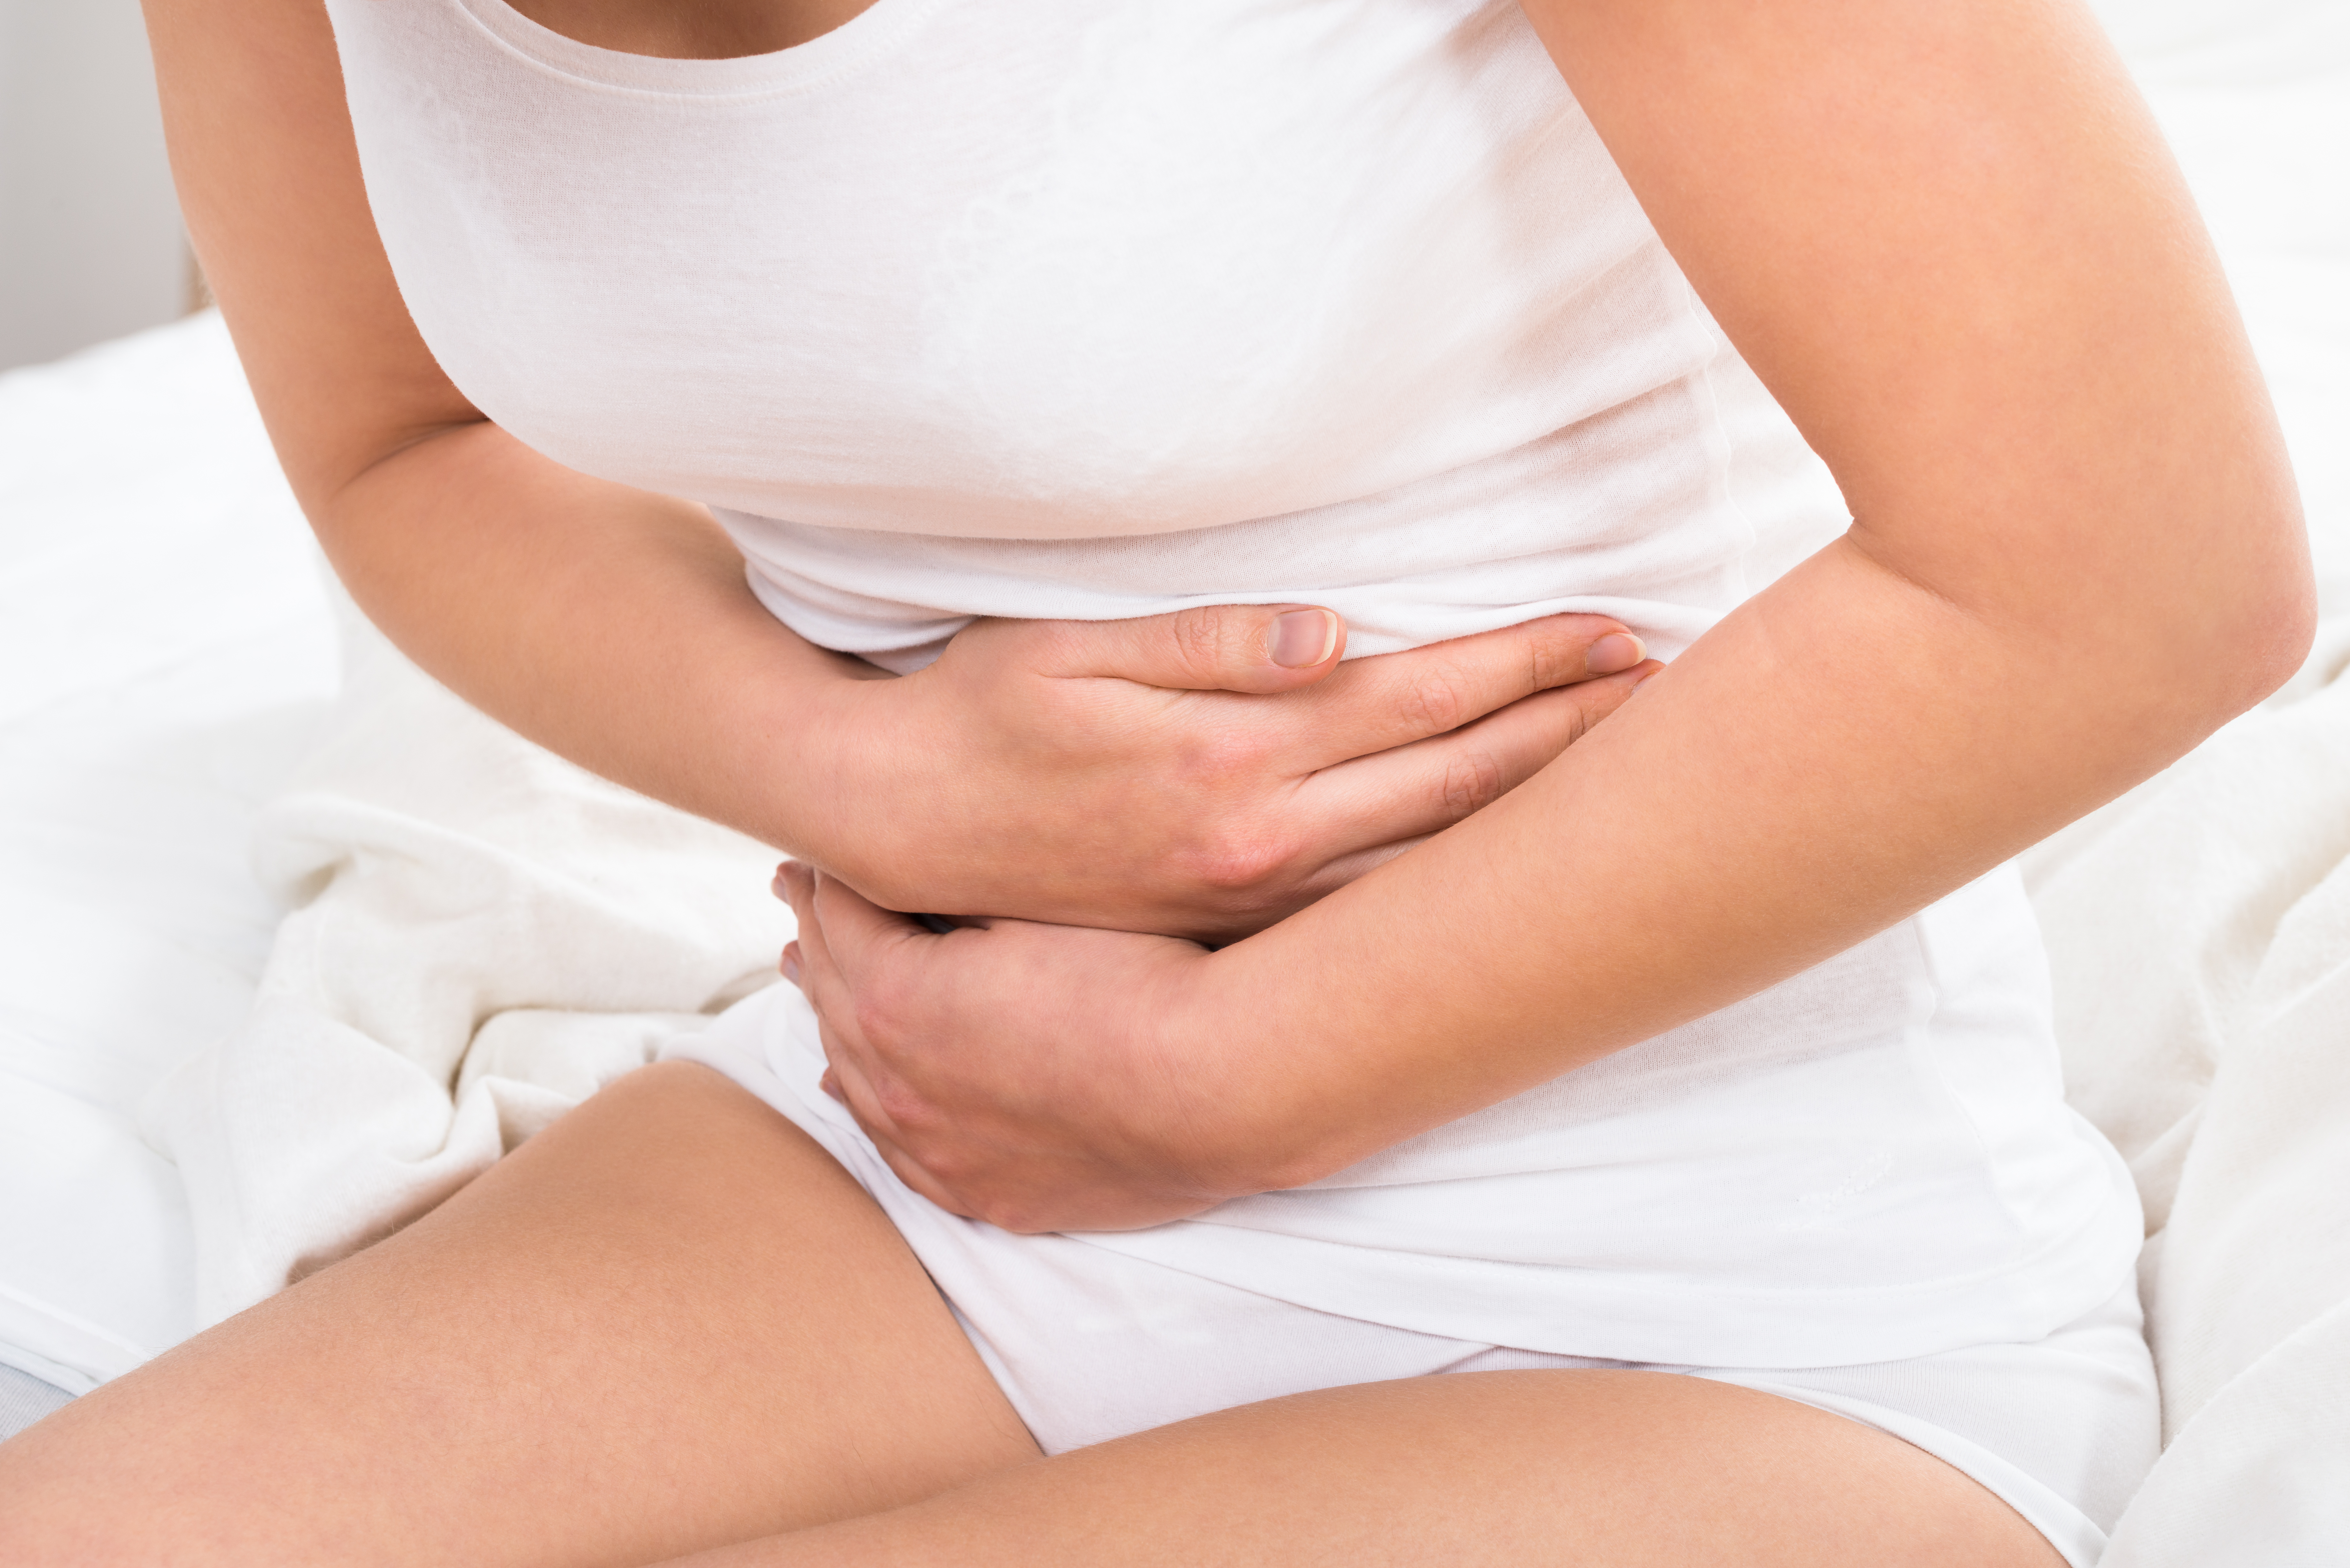 Endometriosis: Causes, Symptoms, and Treatments